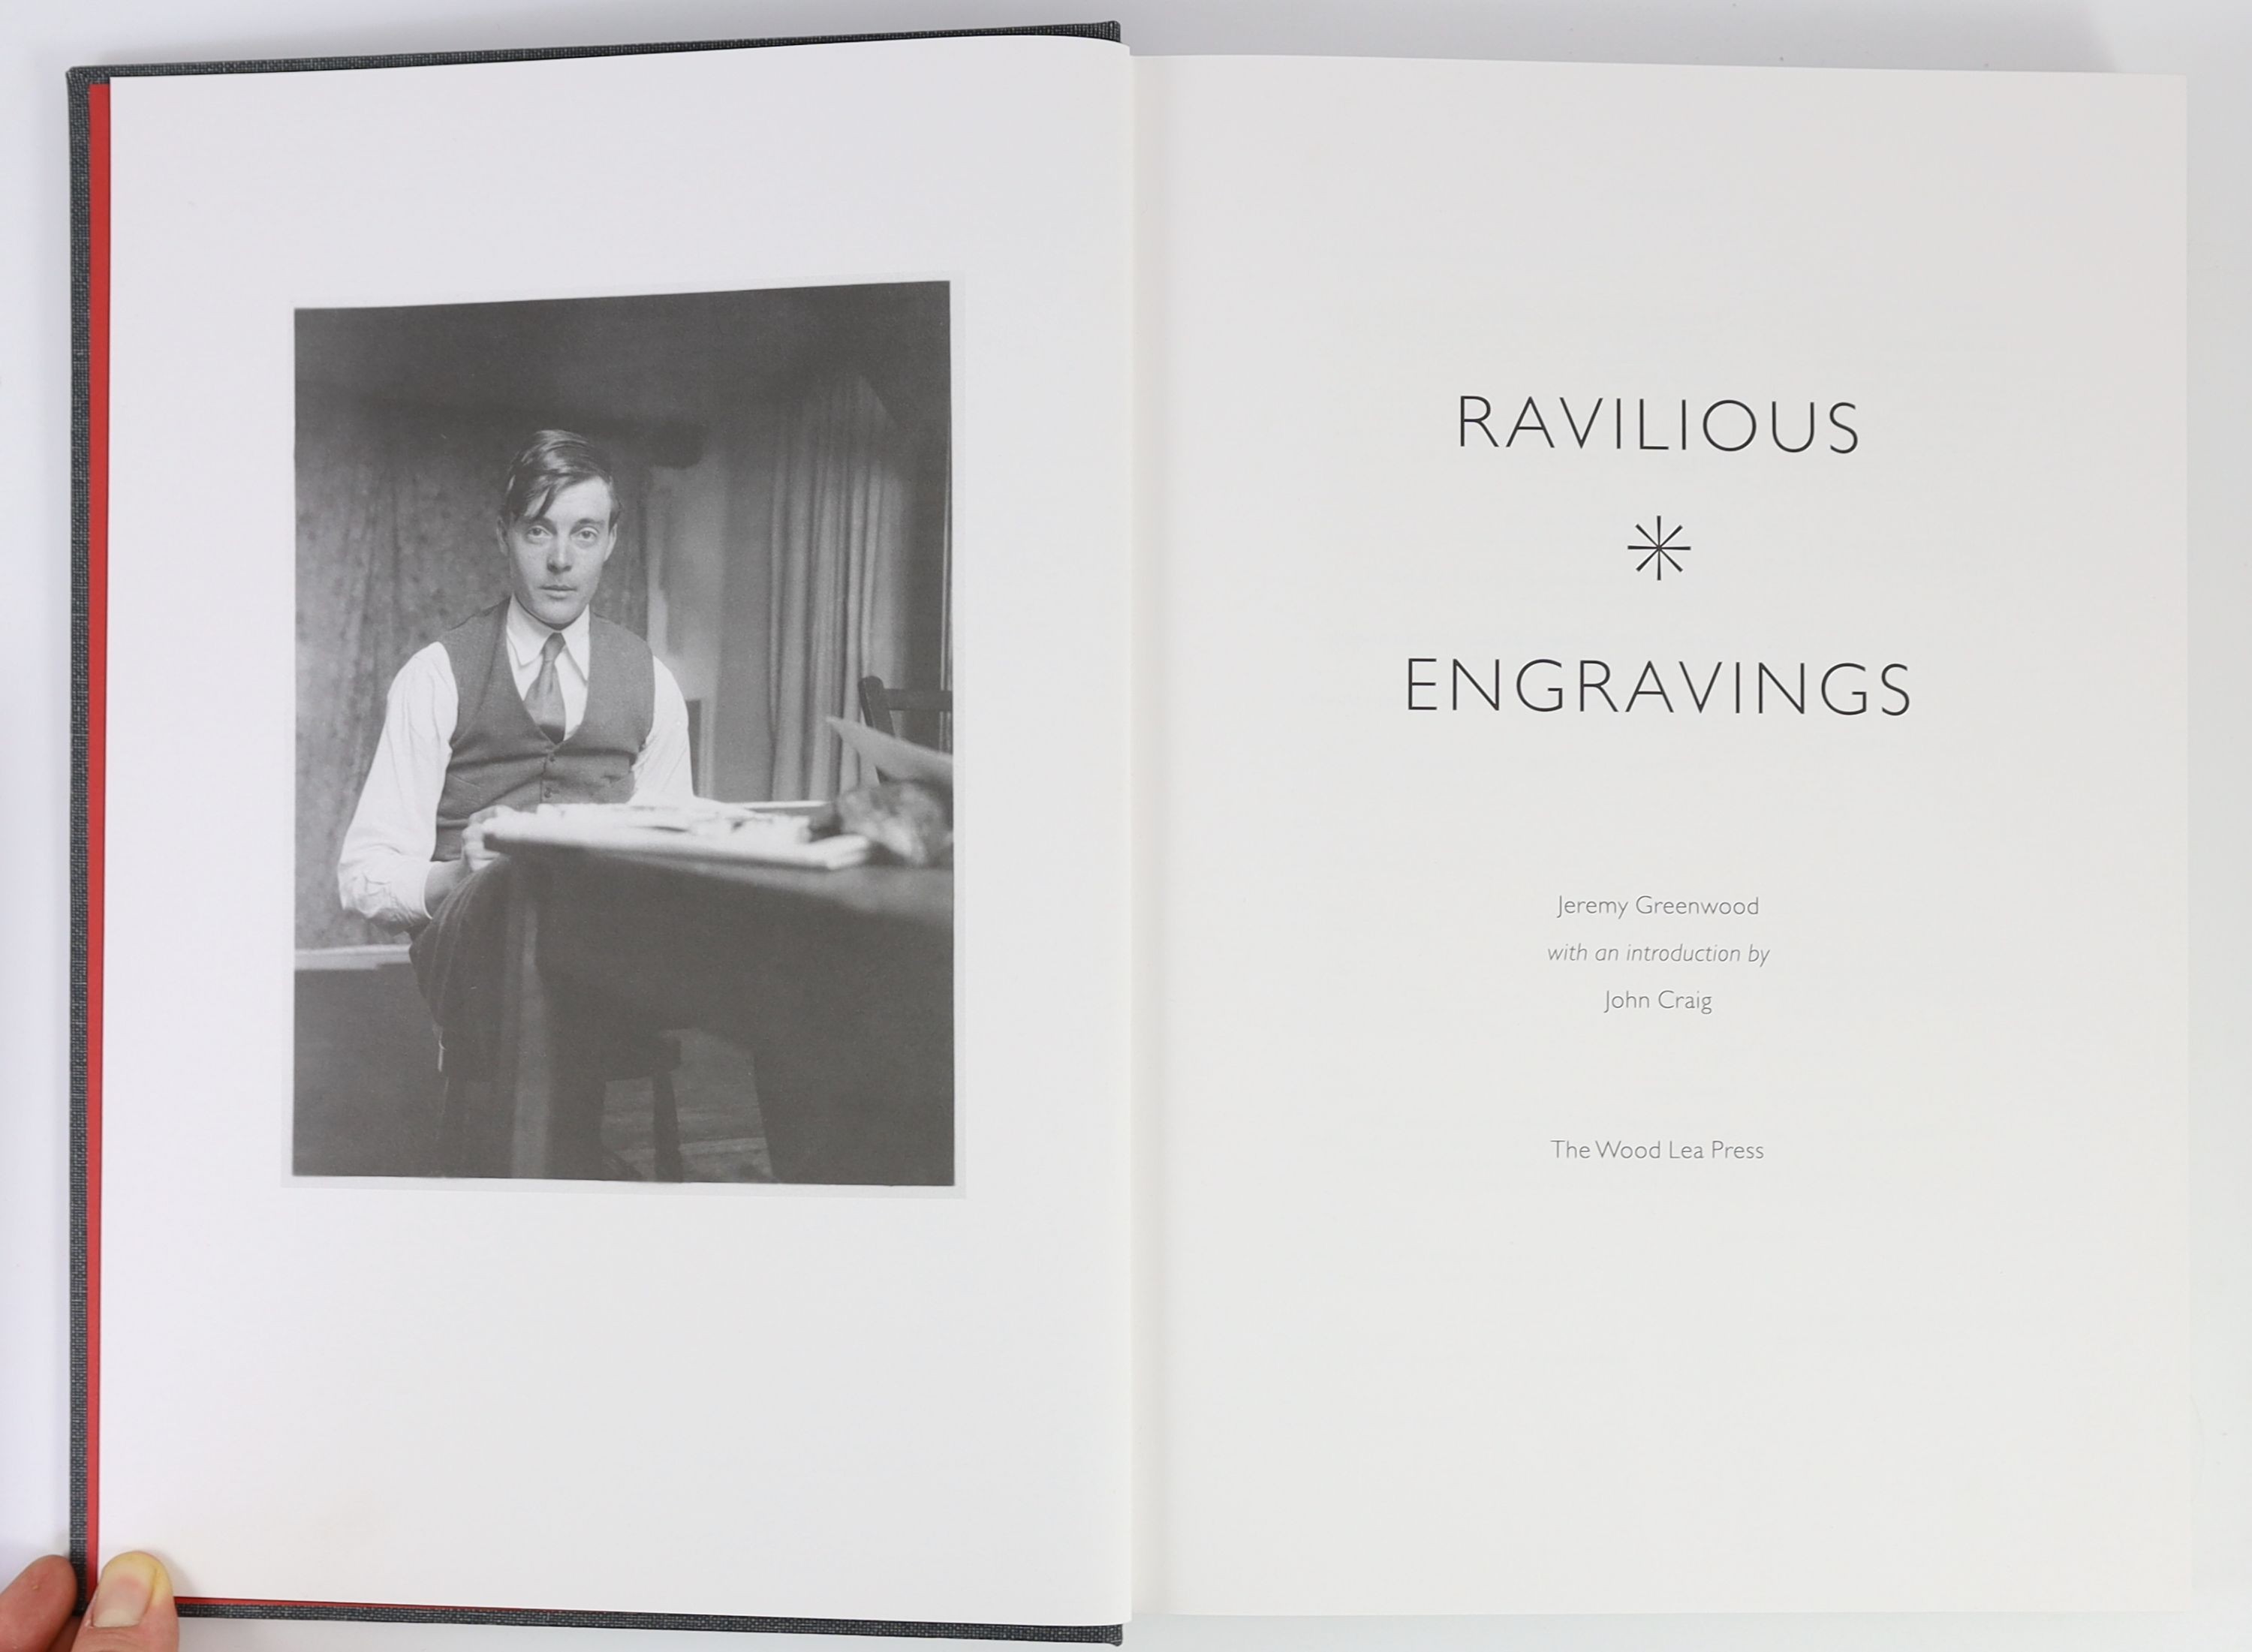 Greenwood, Jeremy - Ravilious Engravings, one of 800, folio, The Wood Lea Press, Woodbridge, 2008, in slip case.